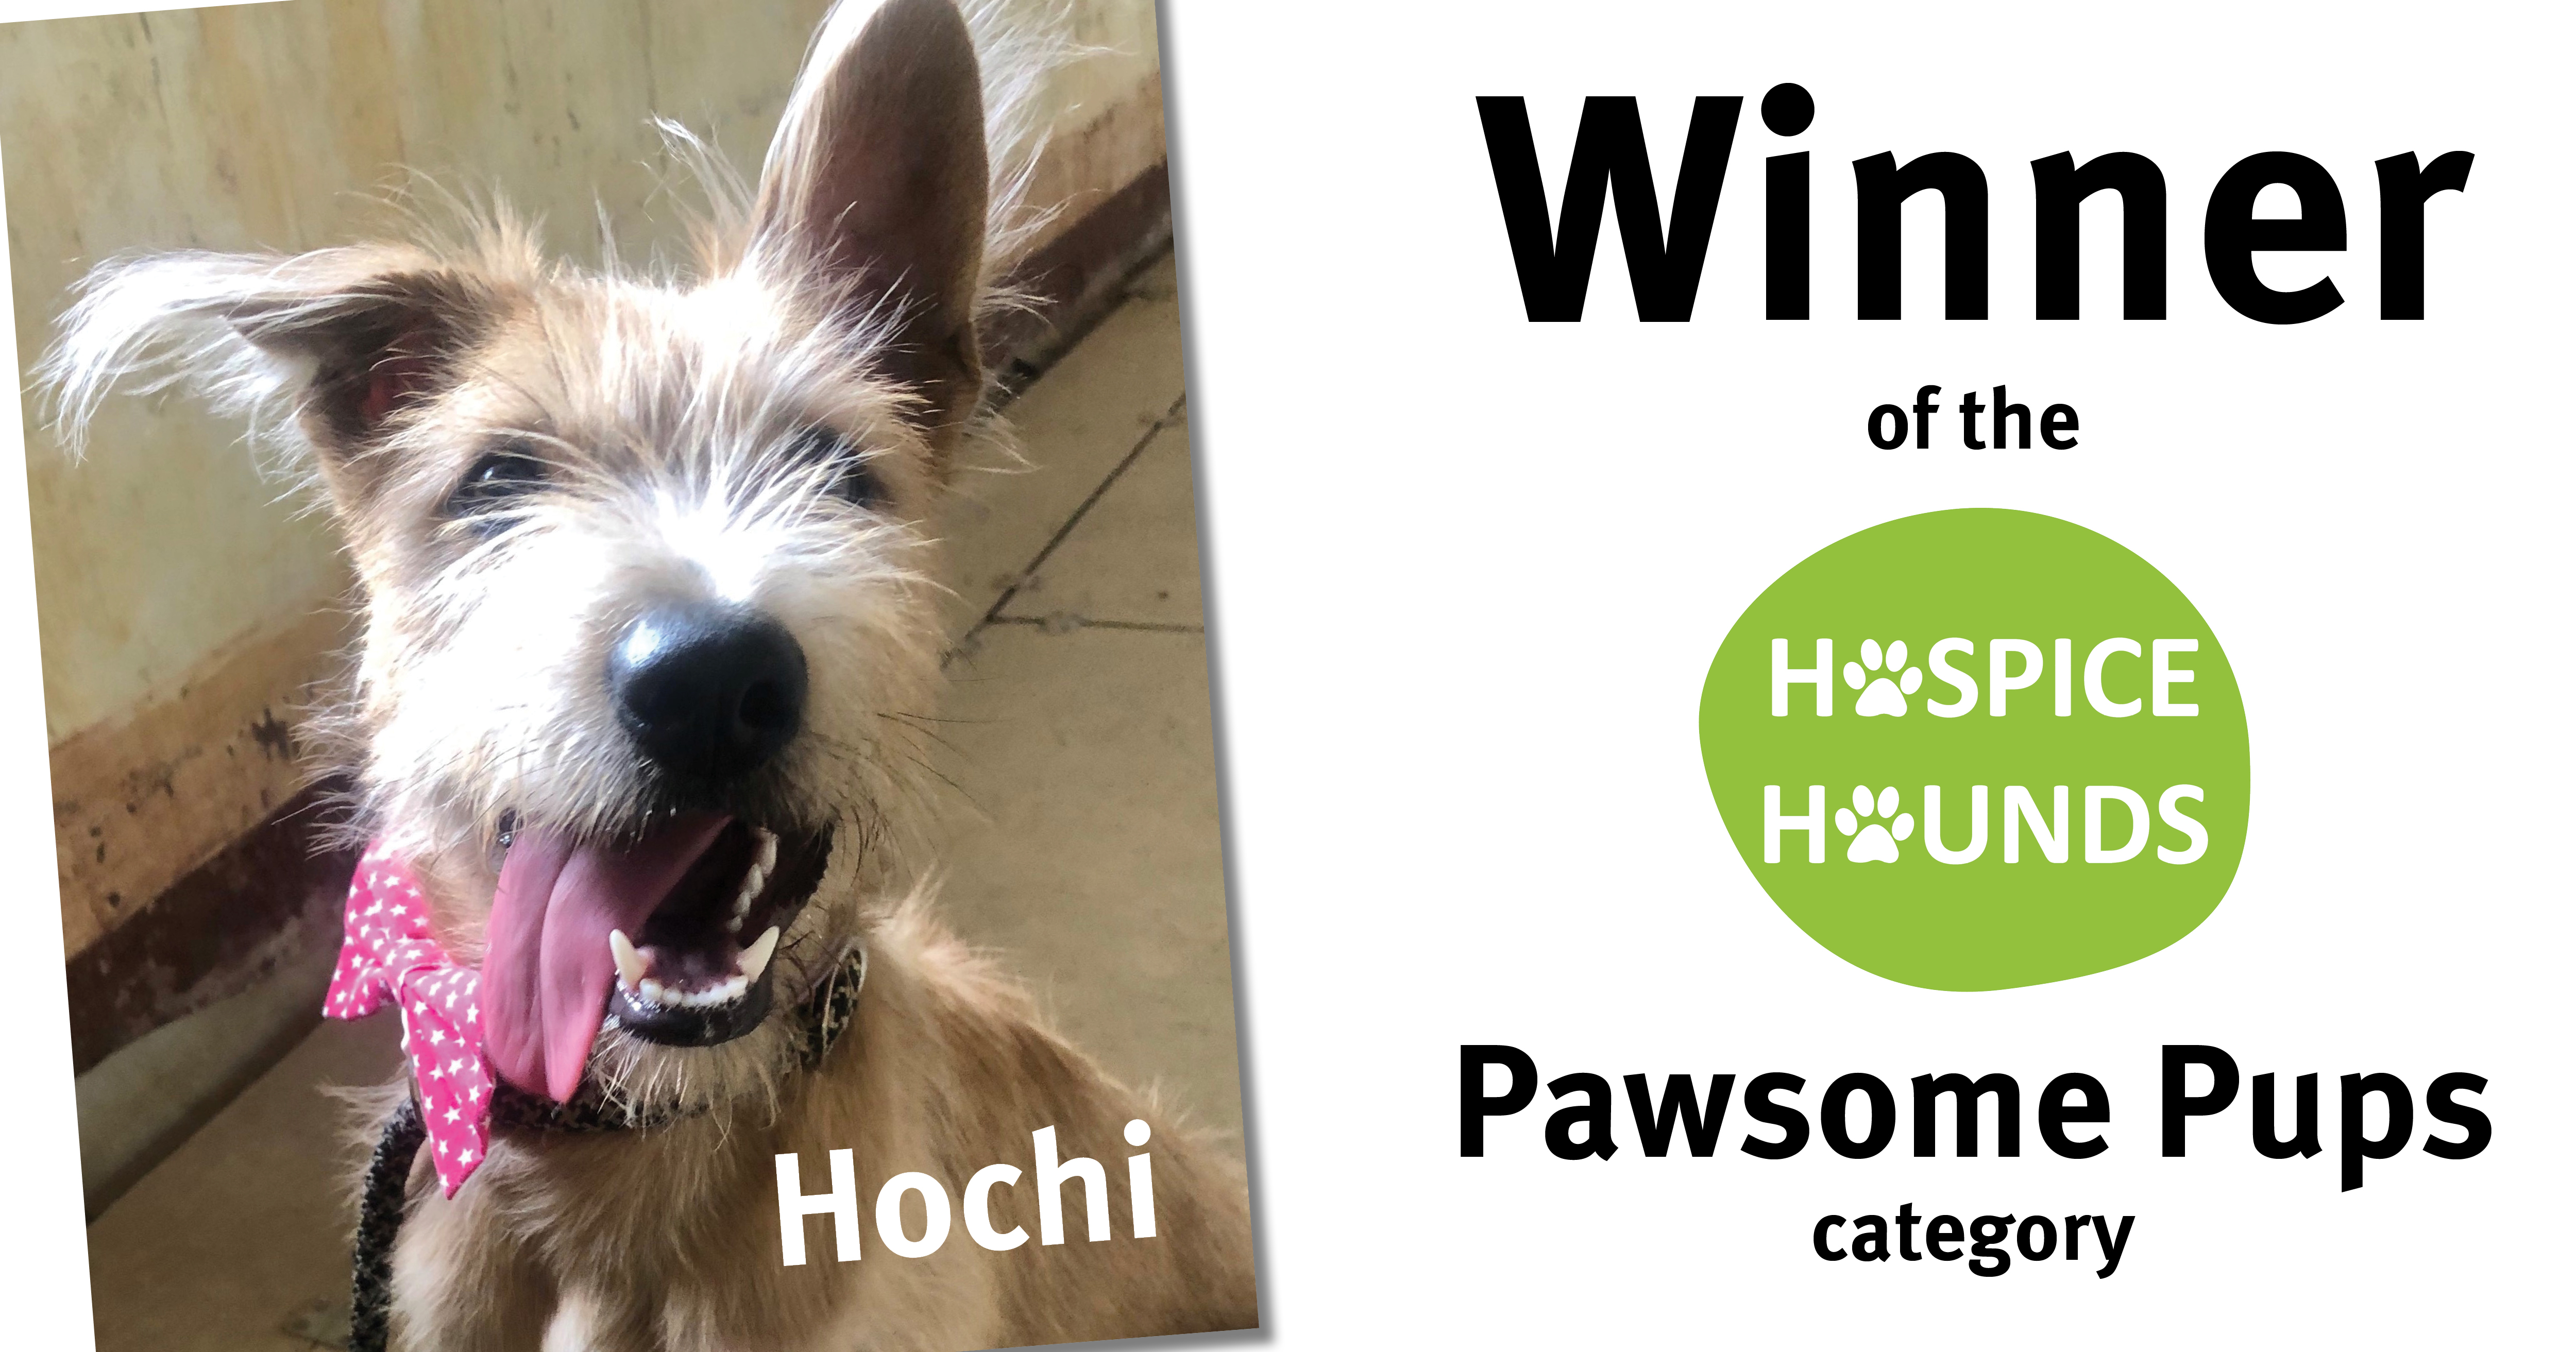 Hospice Hounds pawsome pups winner Hochi